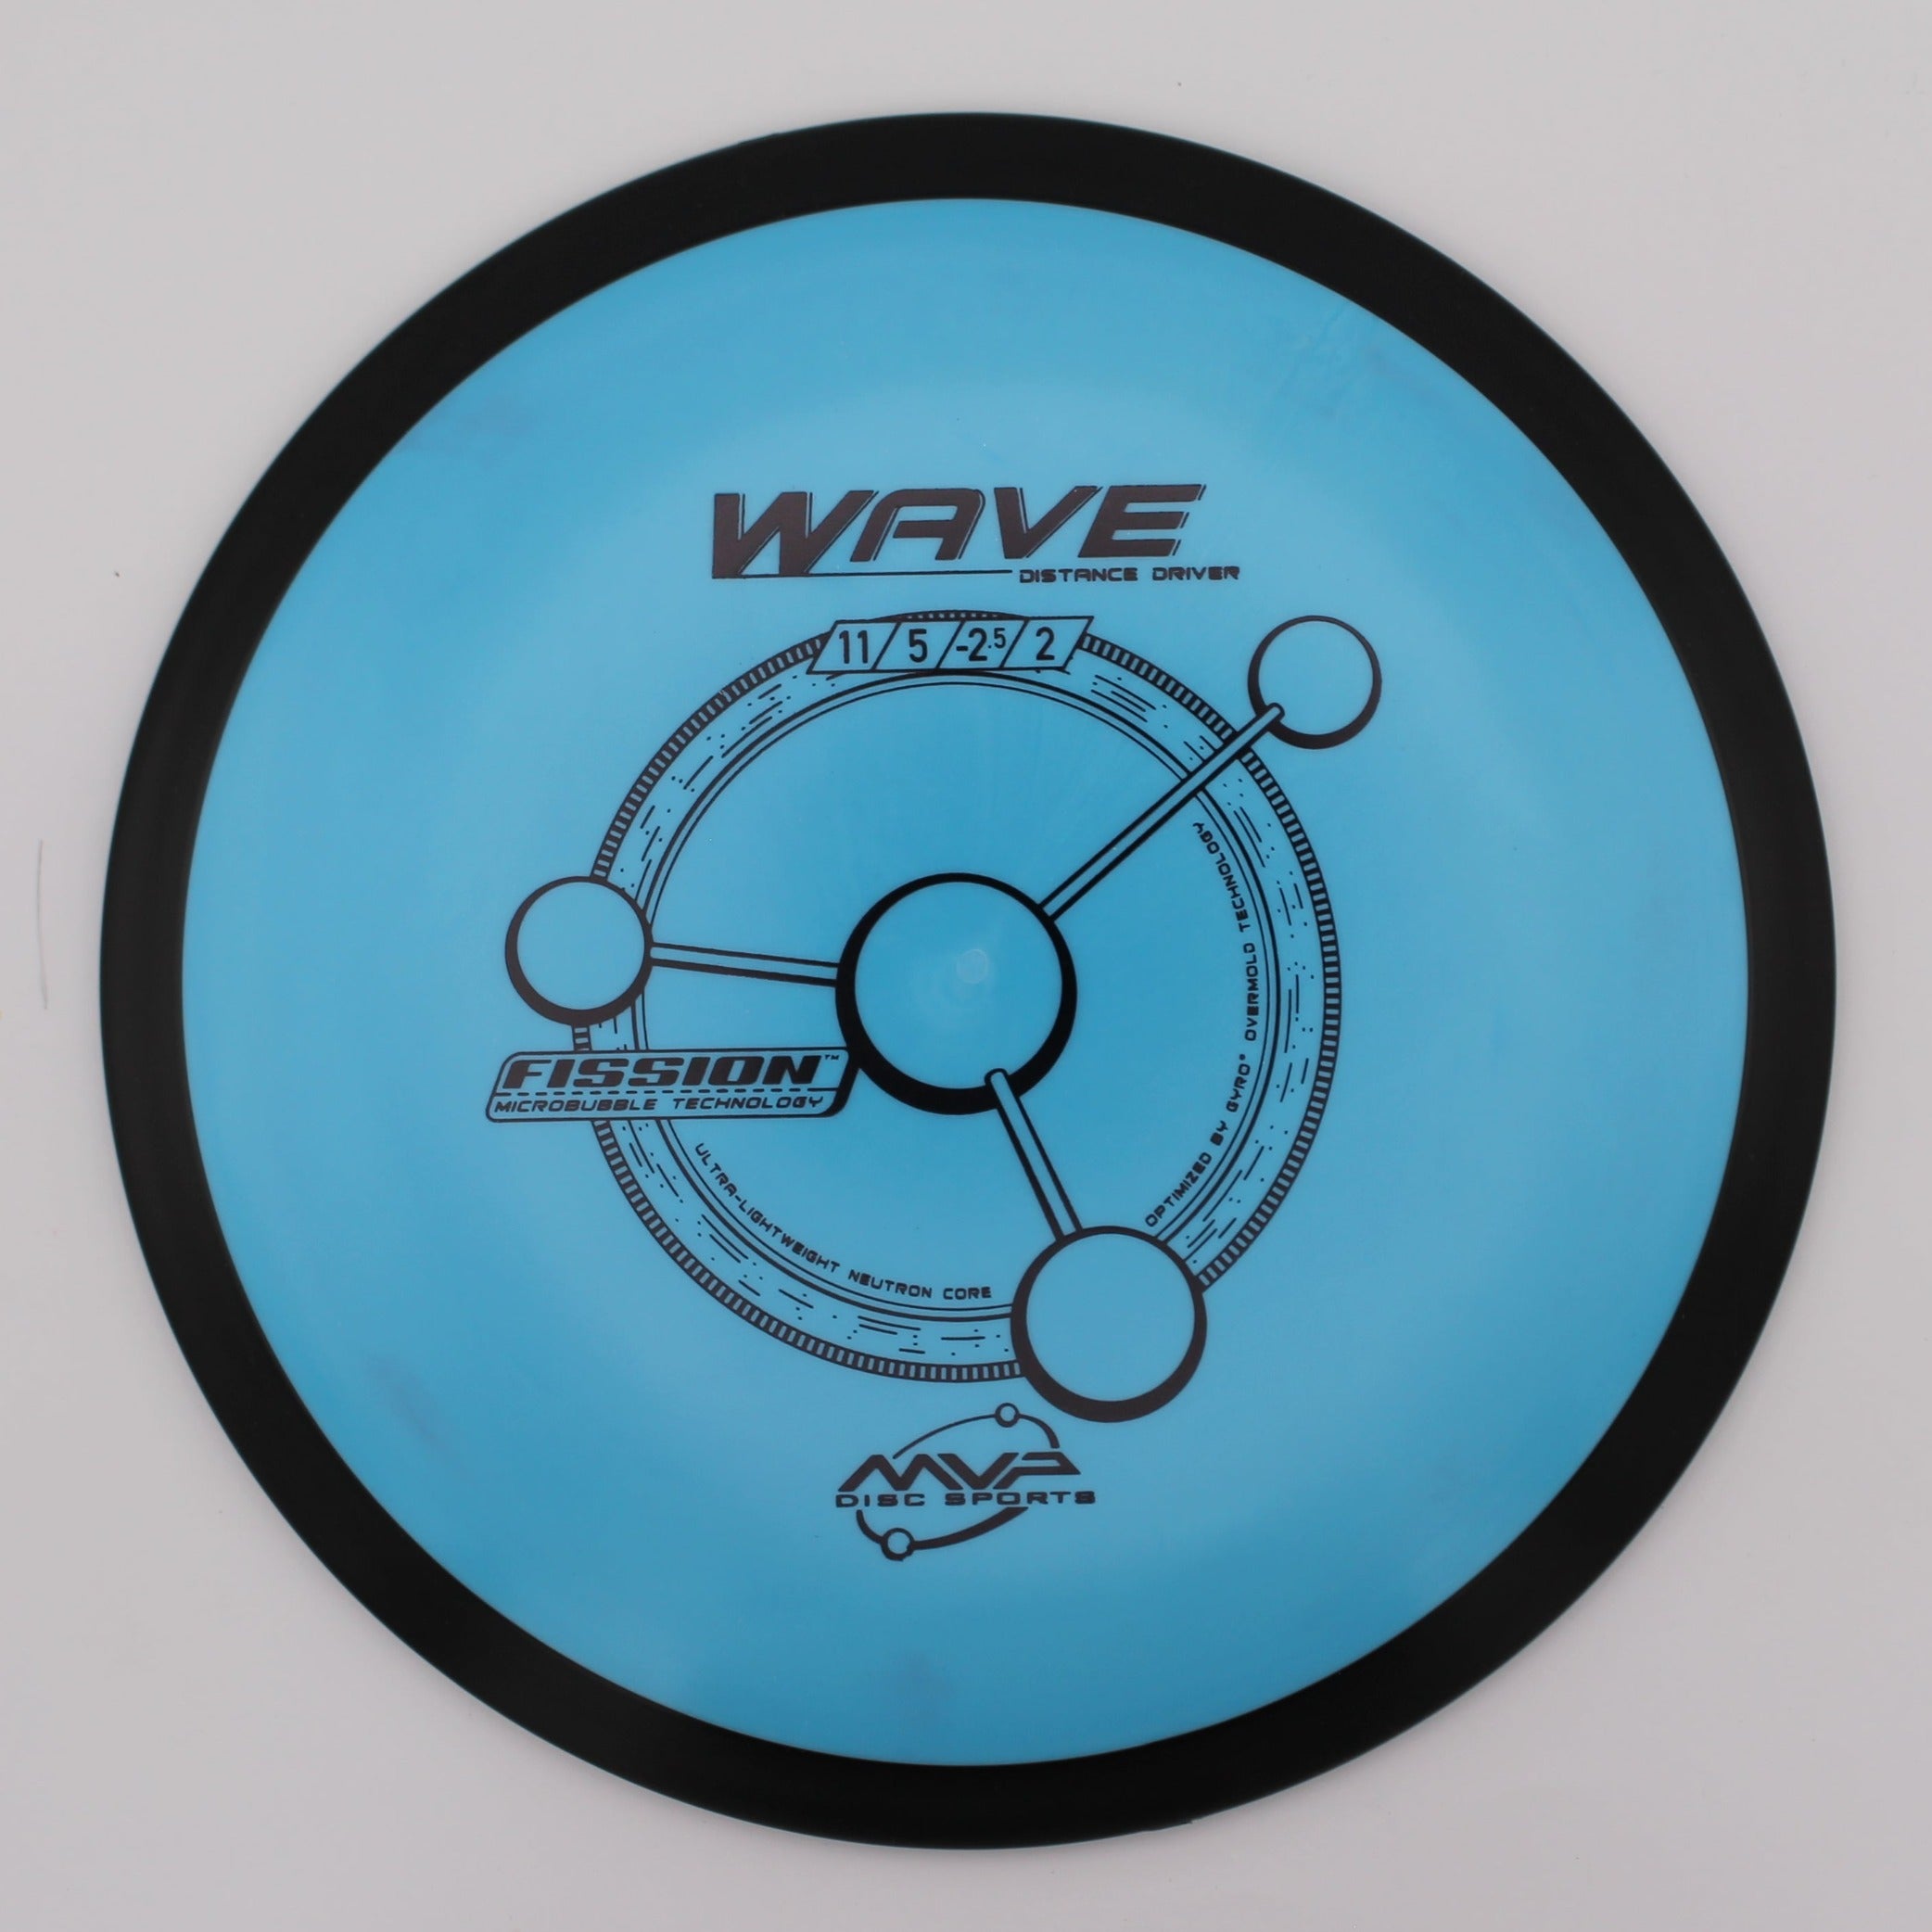 MVP Distance Driver Wave Fission Microbubble Technology Plastic